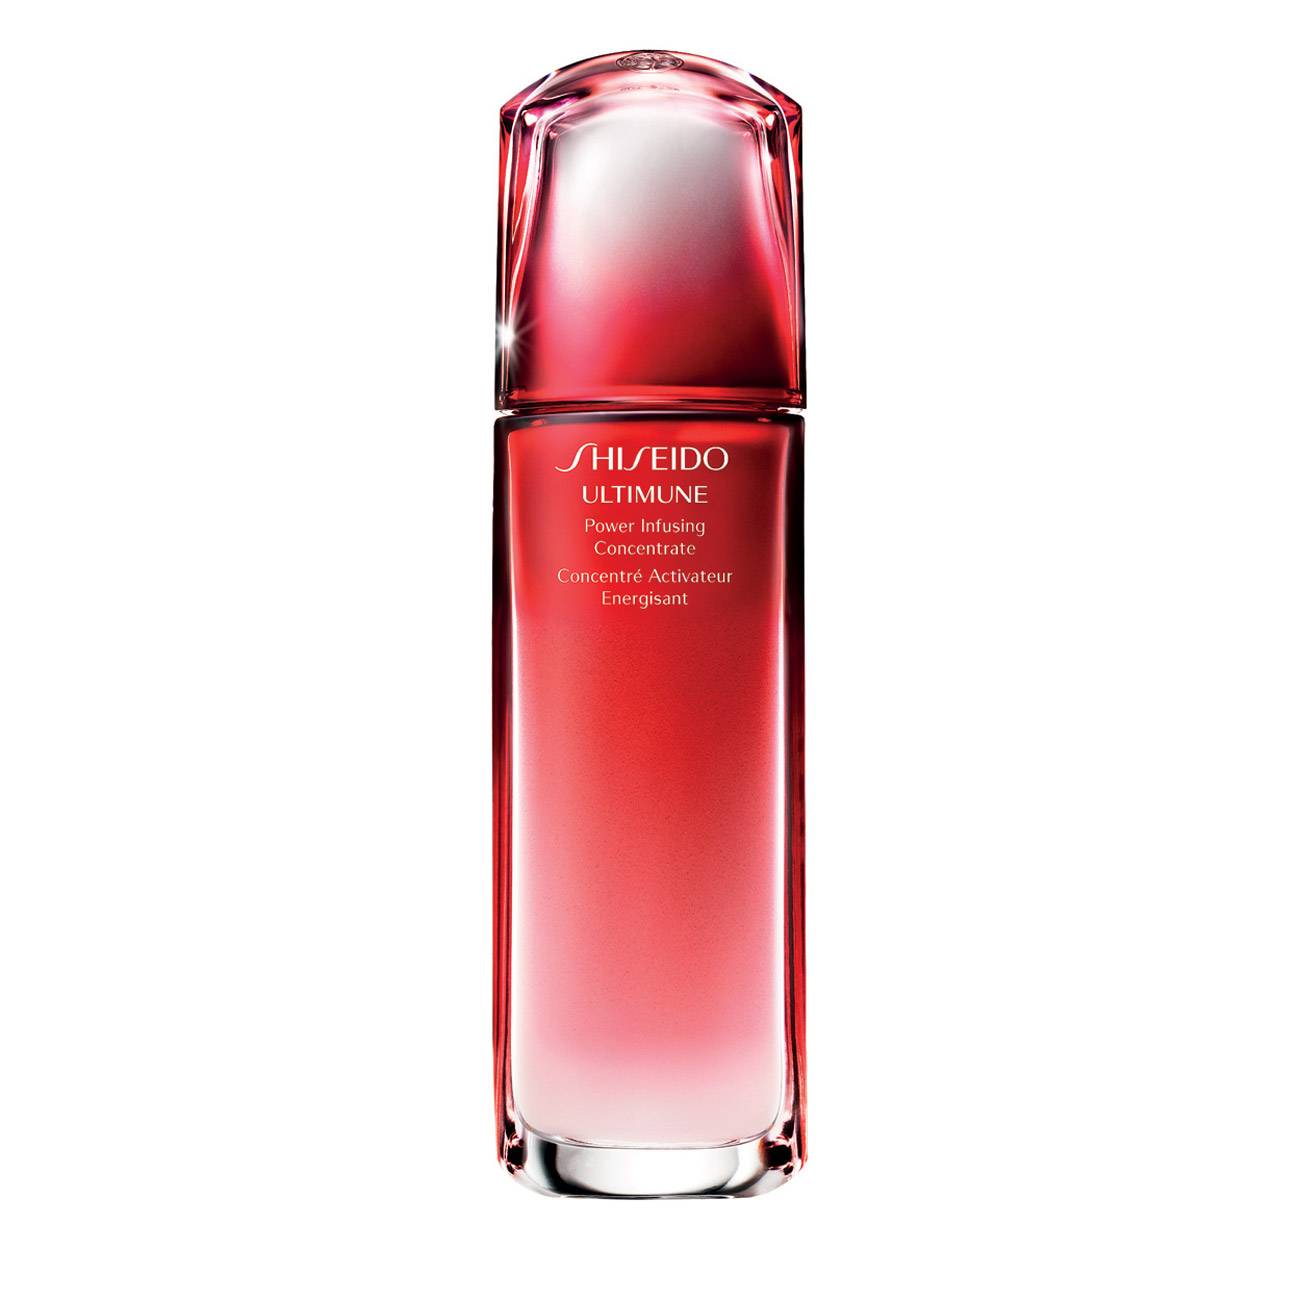 ULTIMUNE POWER INFUSING CONCENTRATE 100ml original Shiseido bestvalue